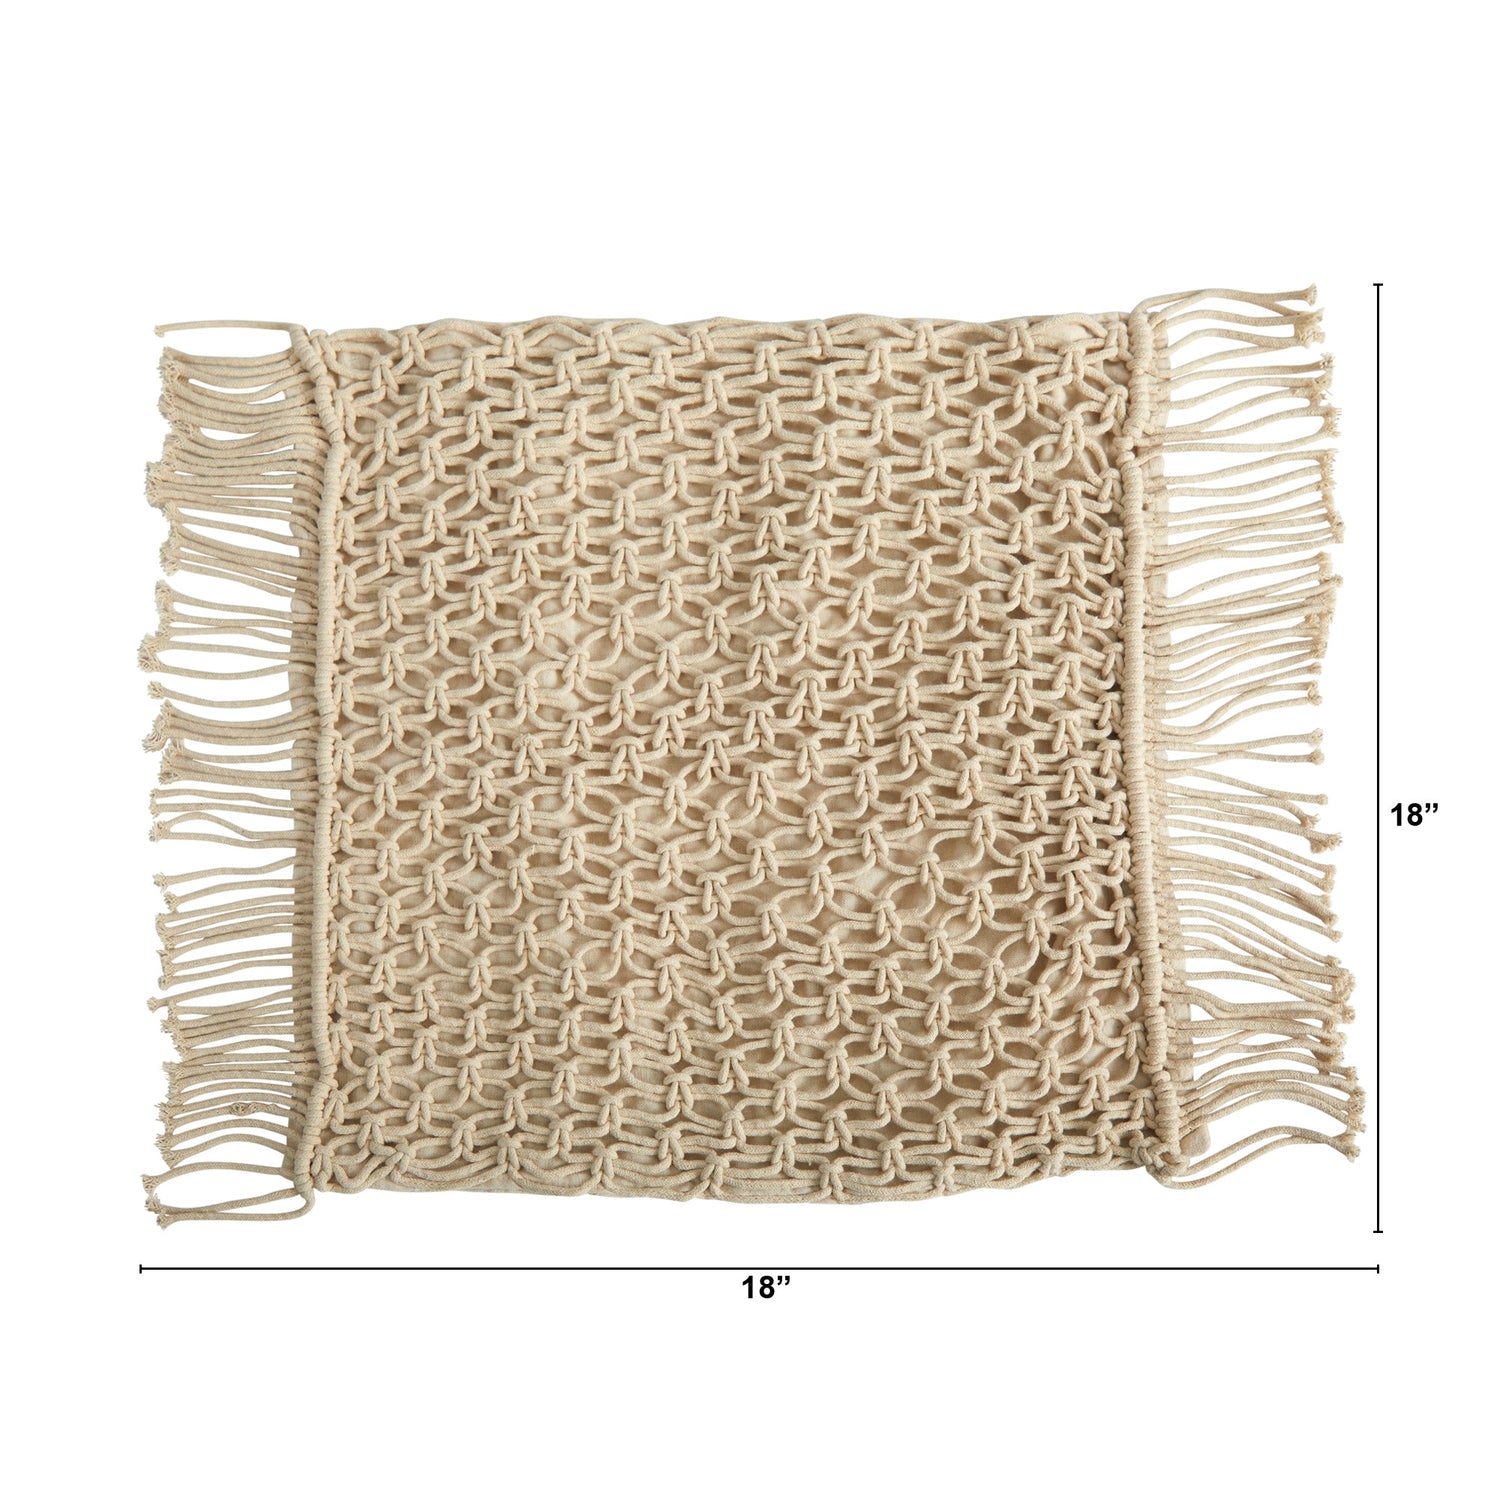 18” BOHO Fringed Woven Macrame Decorative Pillow Cover